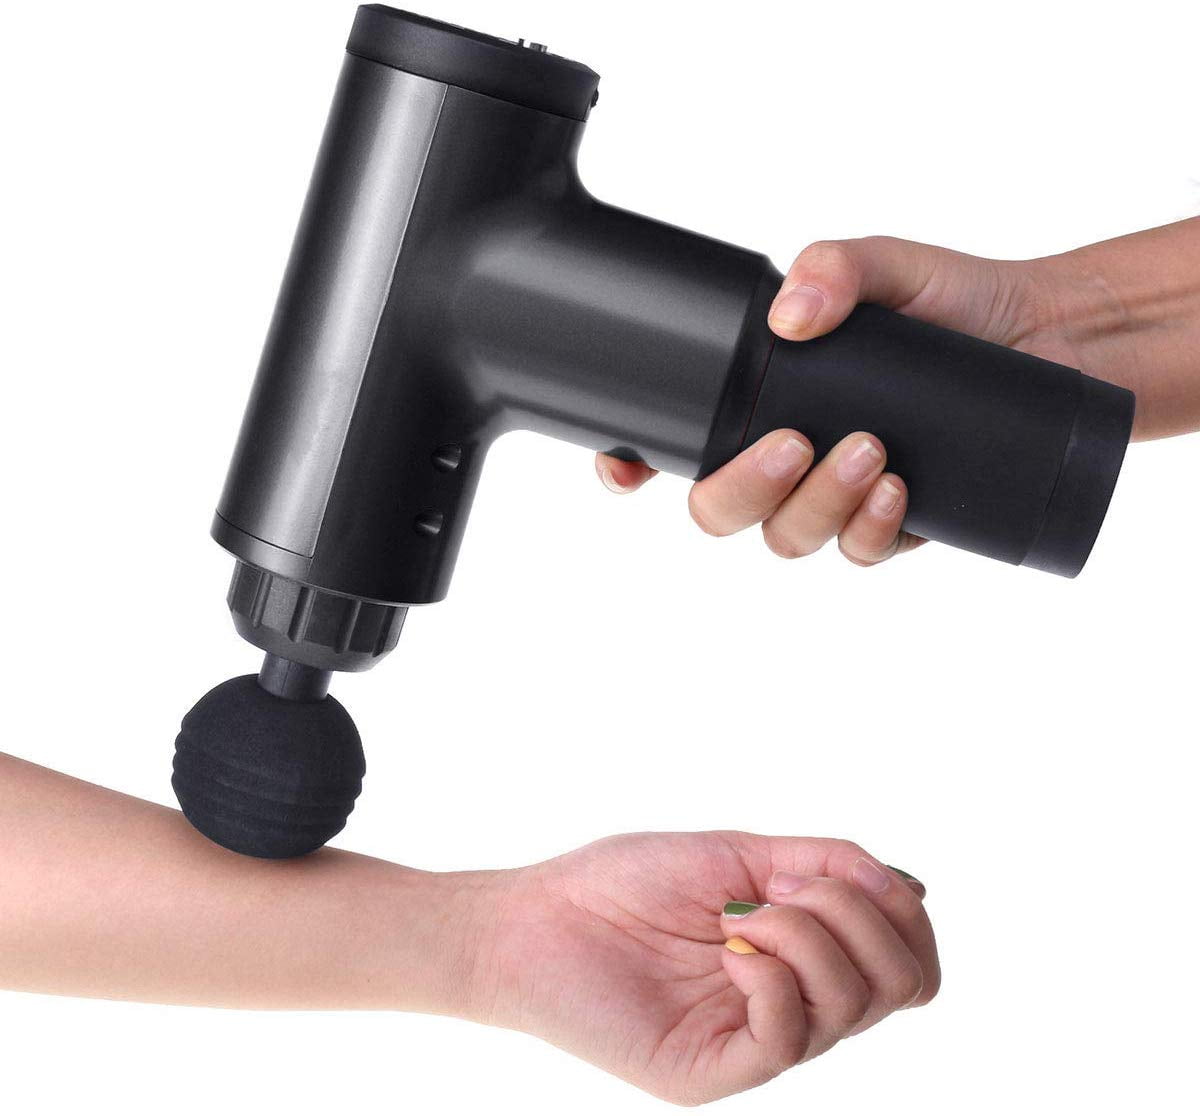 Segmart Percussion Massage Gun For Athletes 6speeds Professional Handheld Deep Tissue Muscle